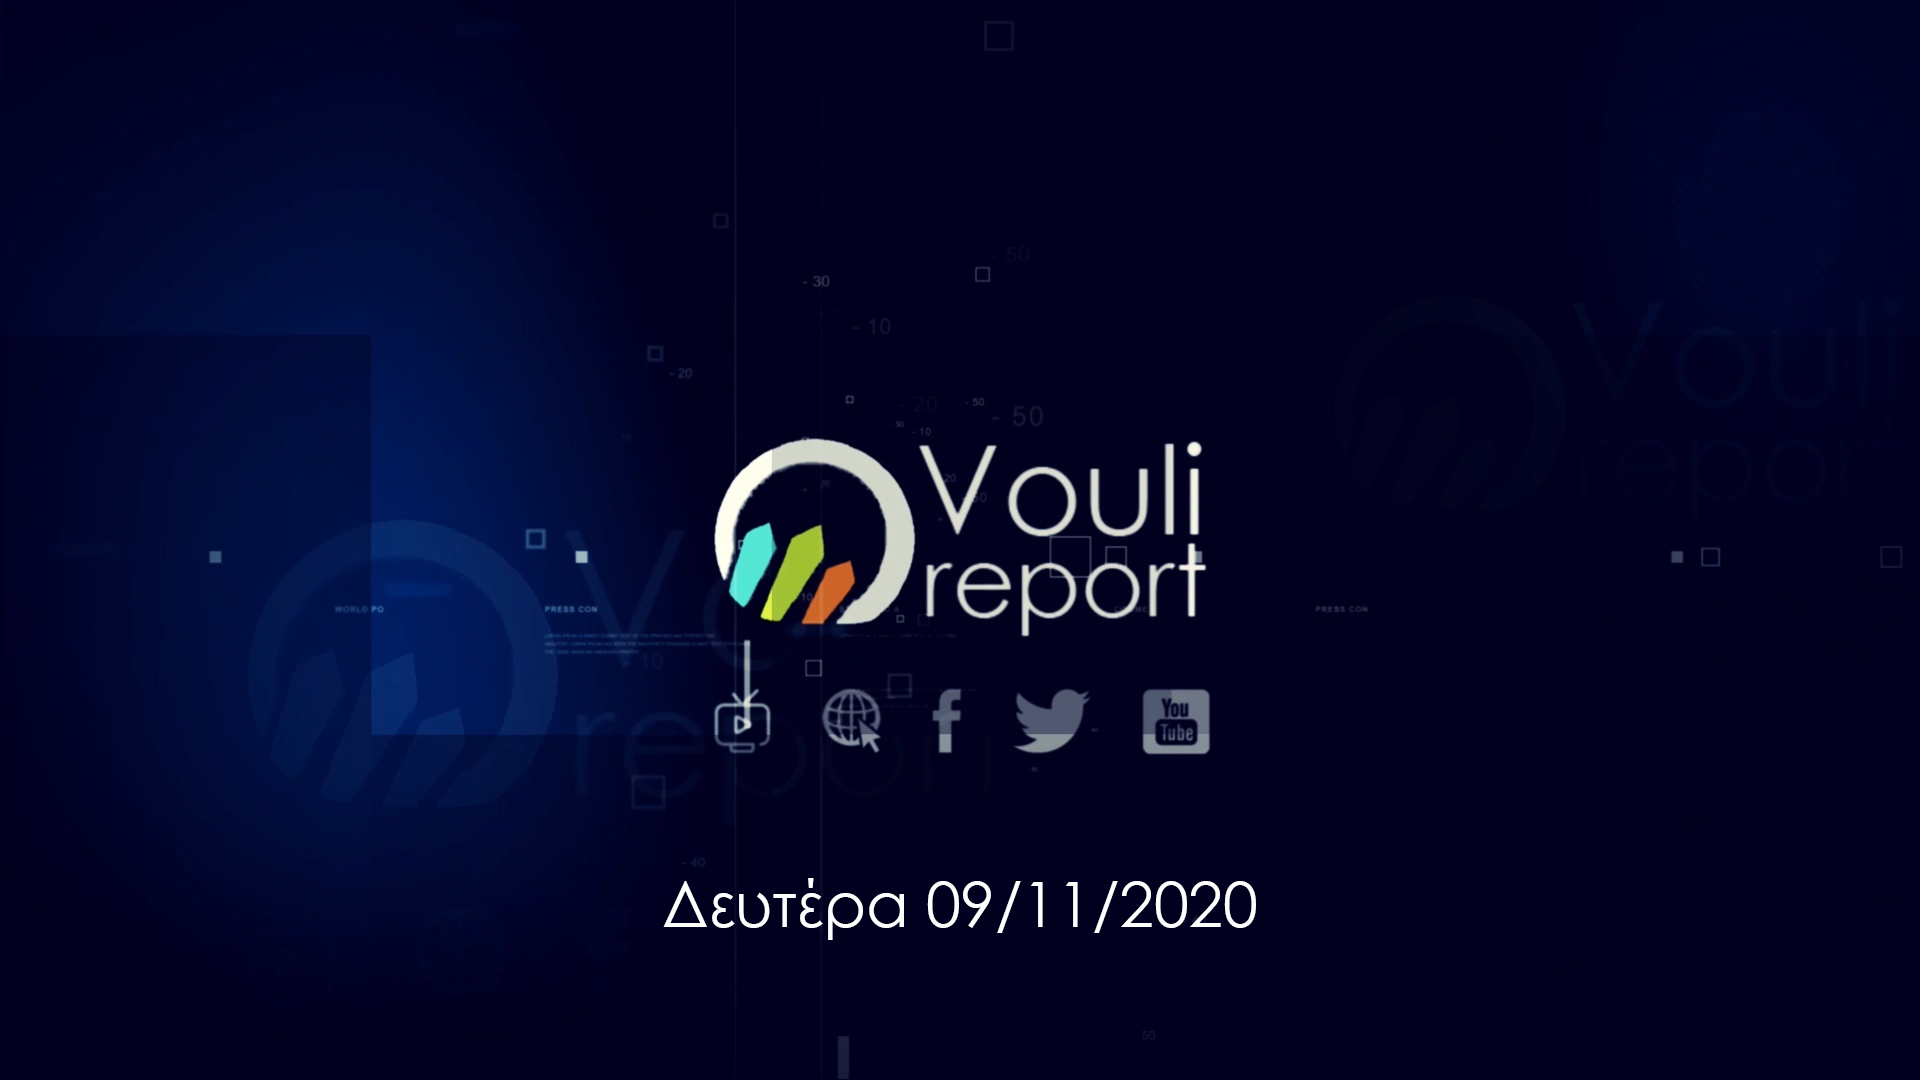 Vouli report | 9/11/2020